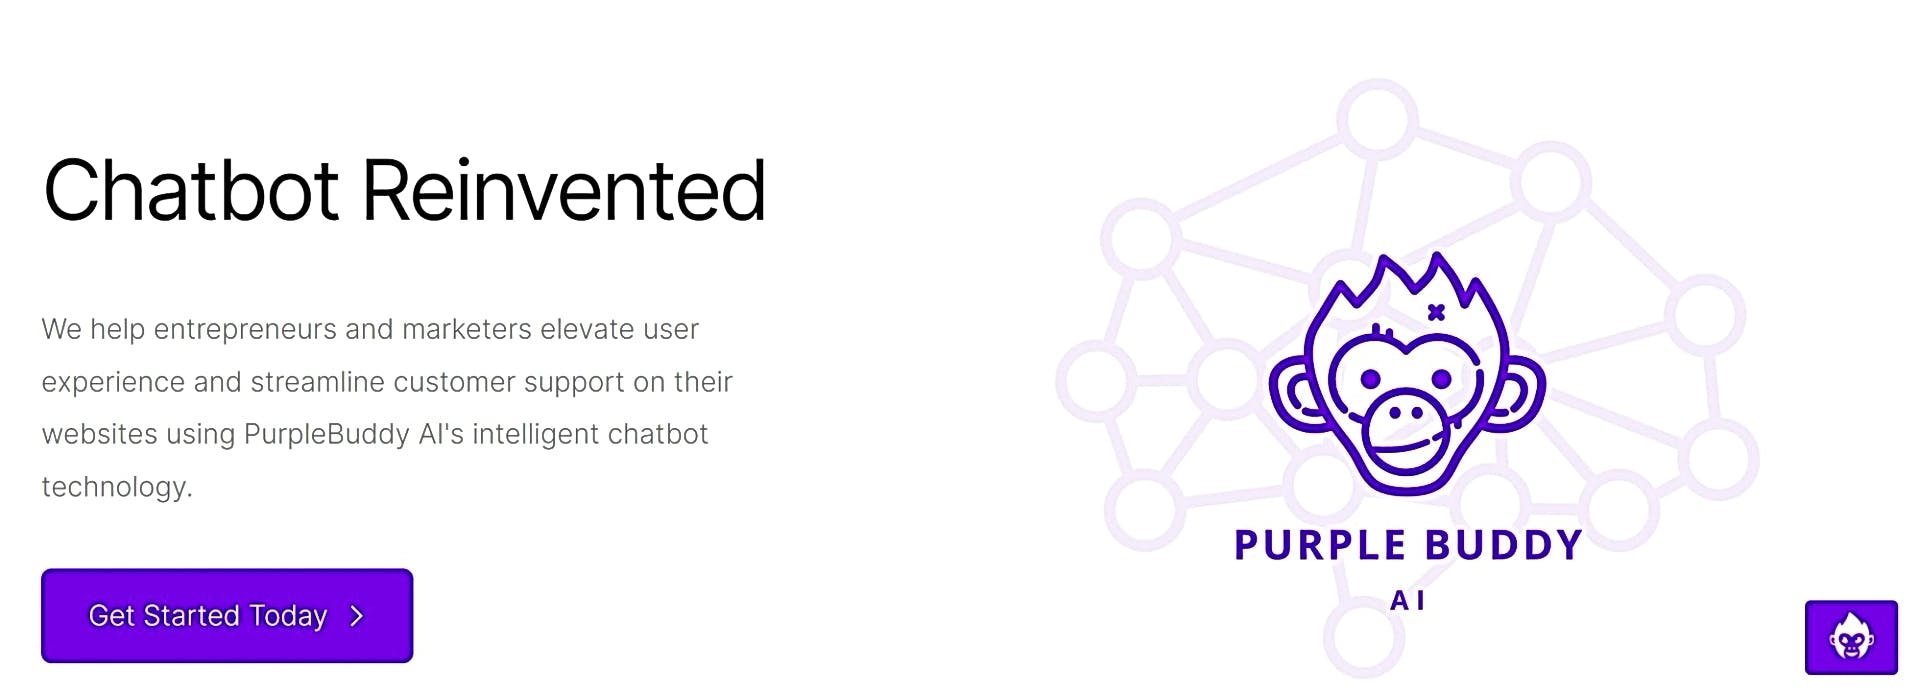 PurpleBuddy-AI featured